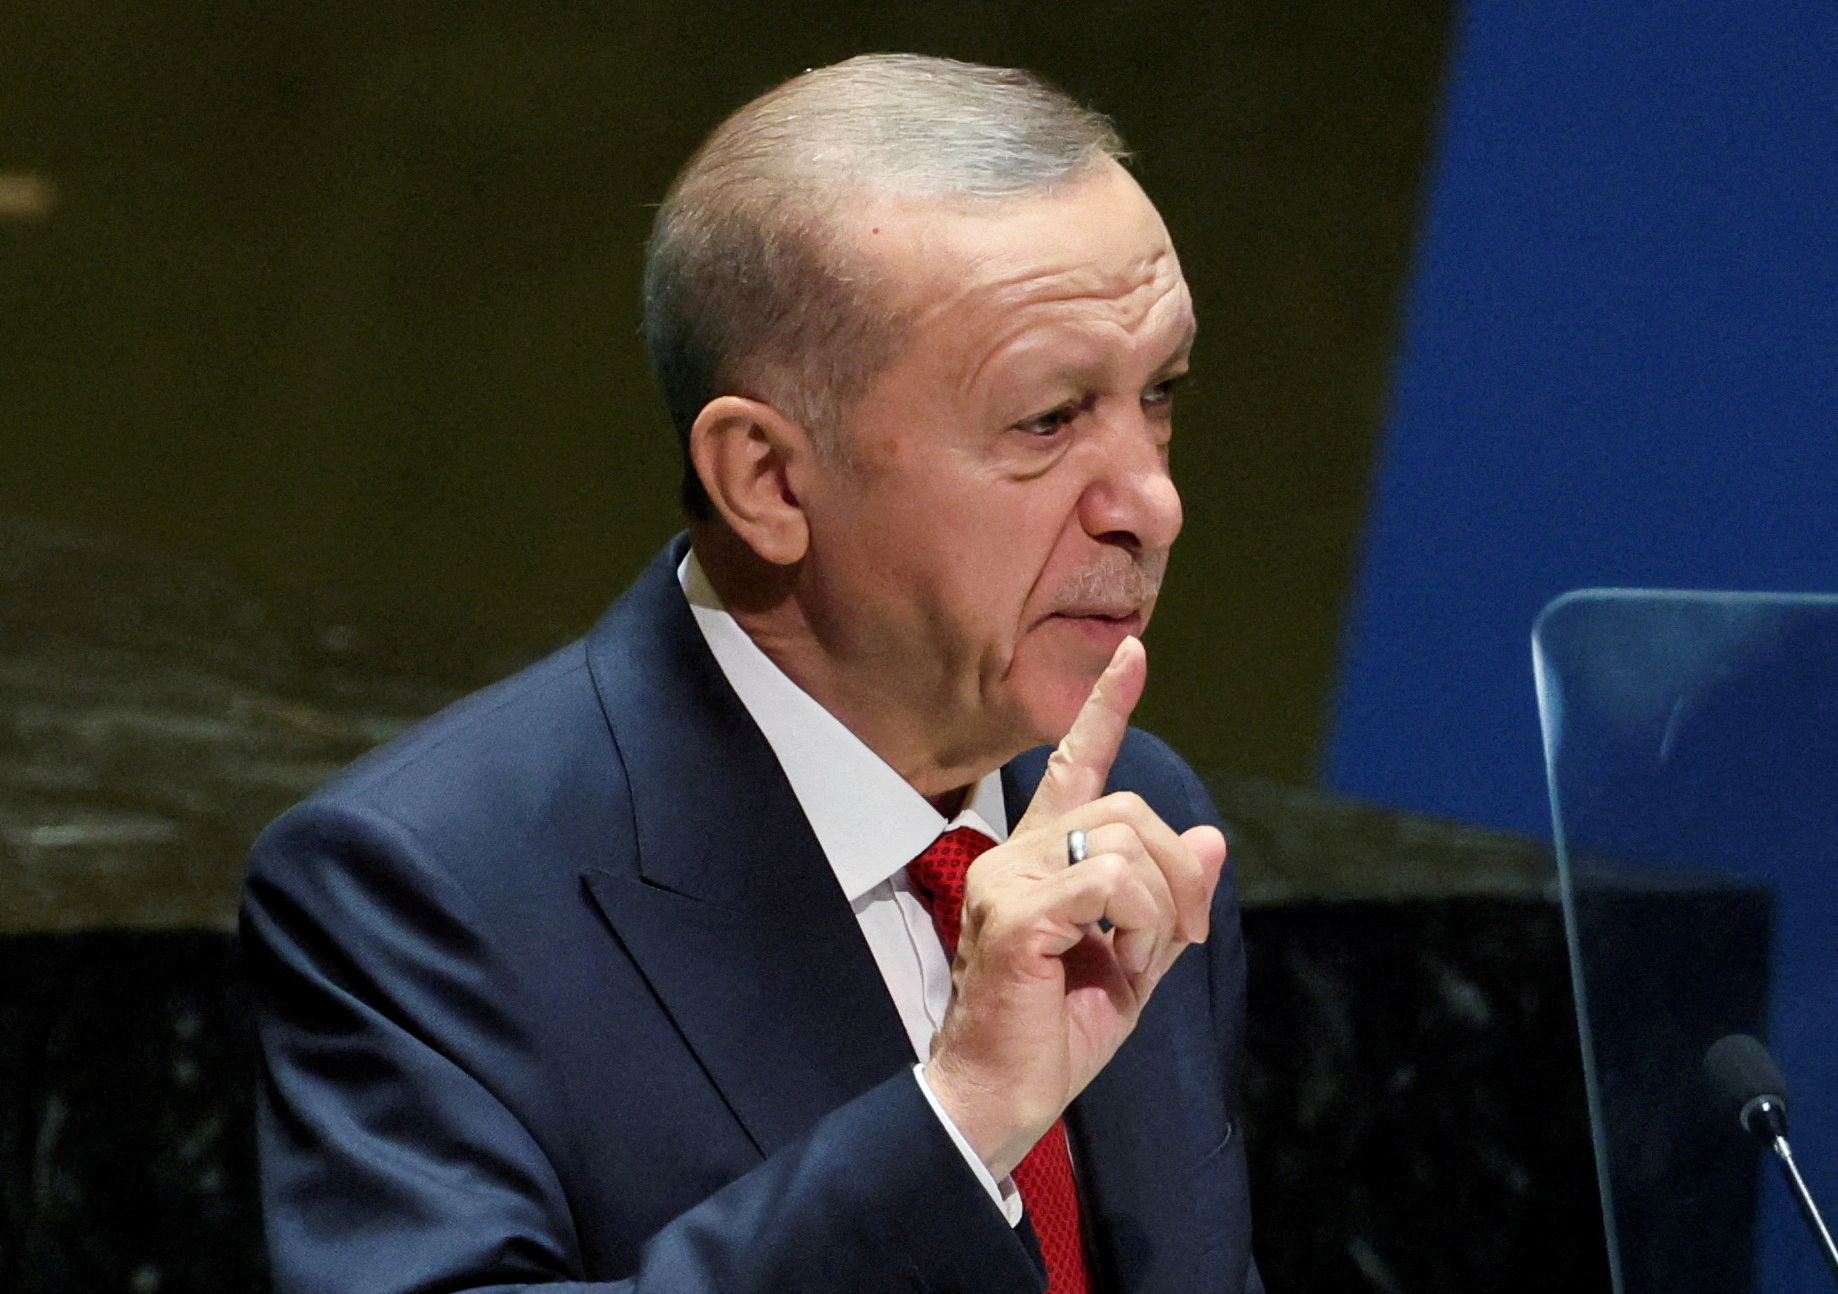 Erdogan on Netanyahu: We erased him and threw him aside